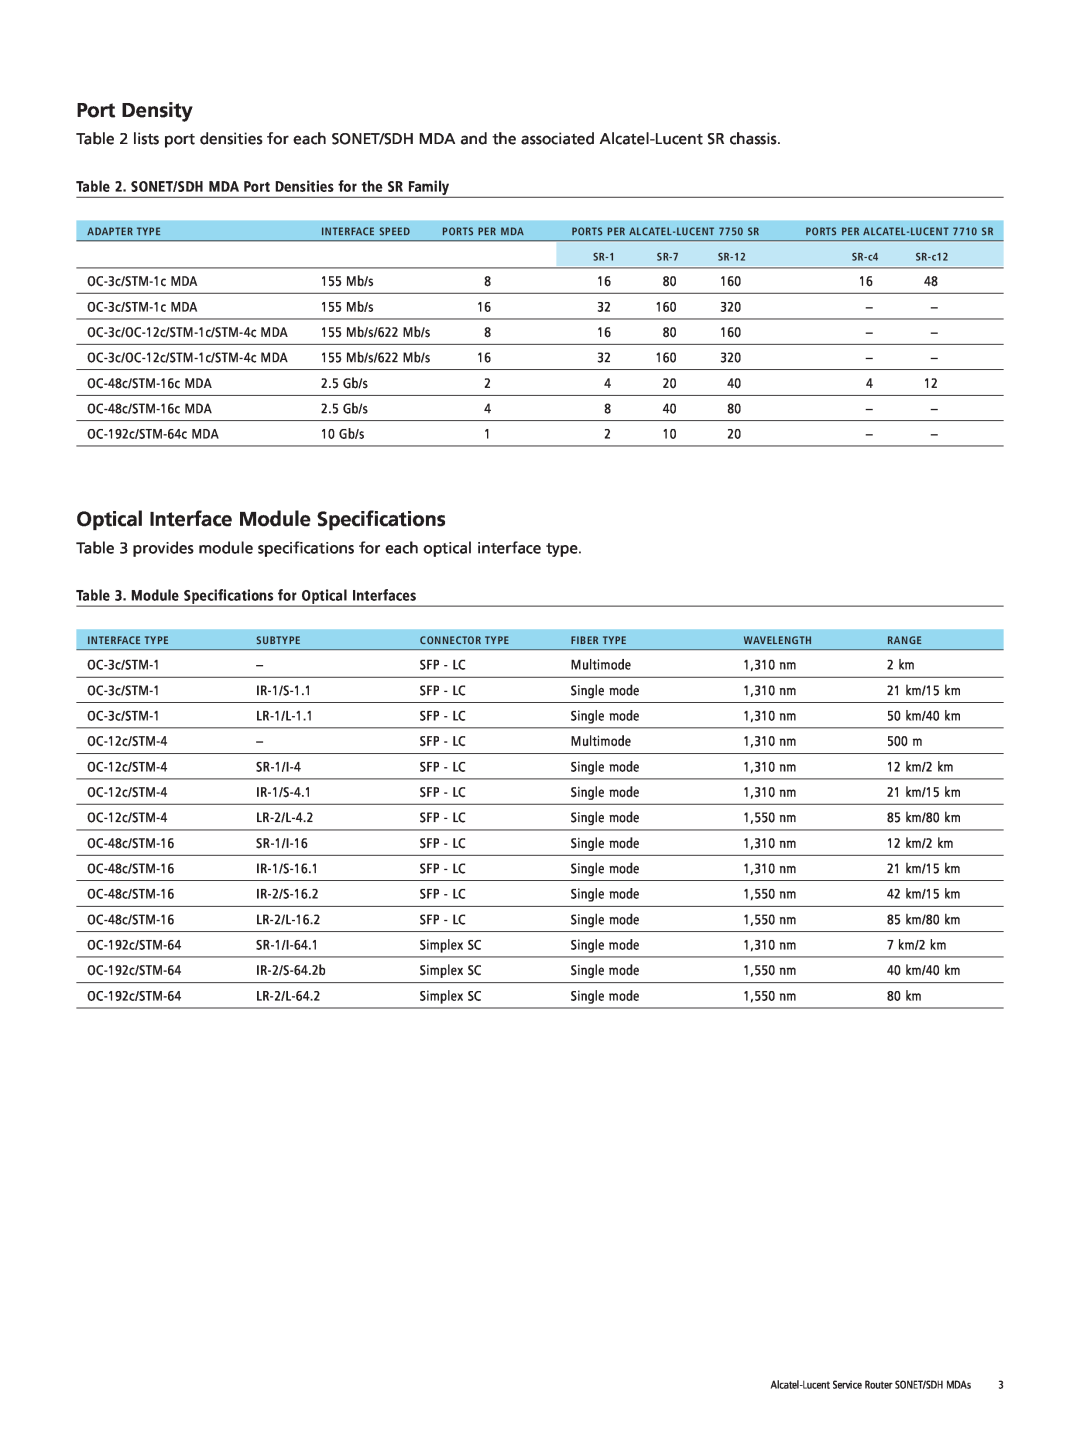 Alcatel-Lucent SONET/SDH MDAs manual Port Density, Optical Interface Module Specifications 